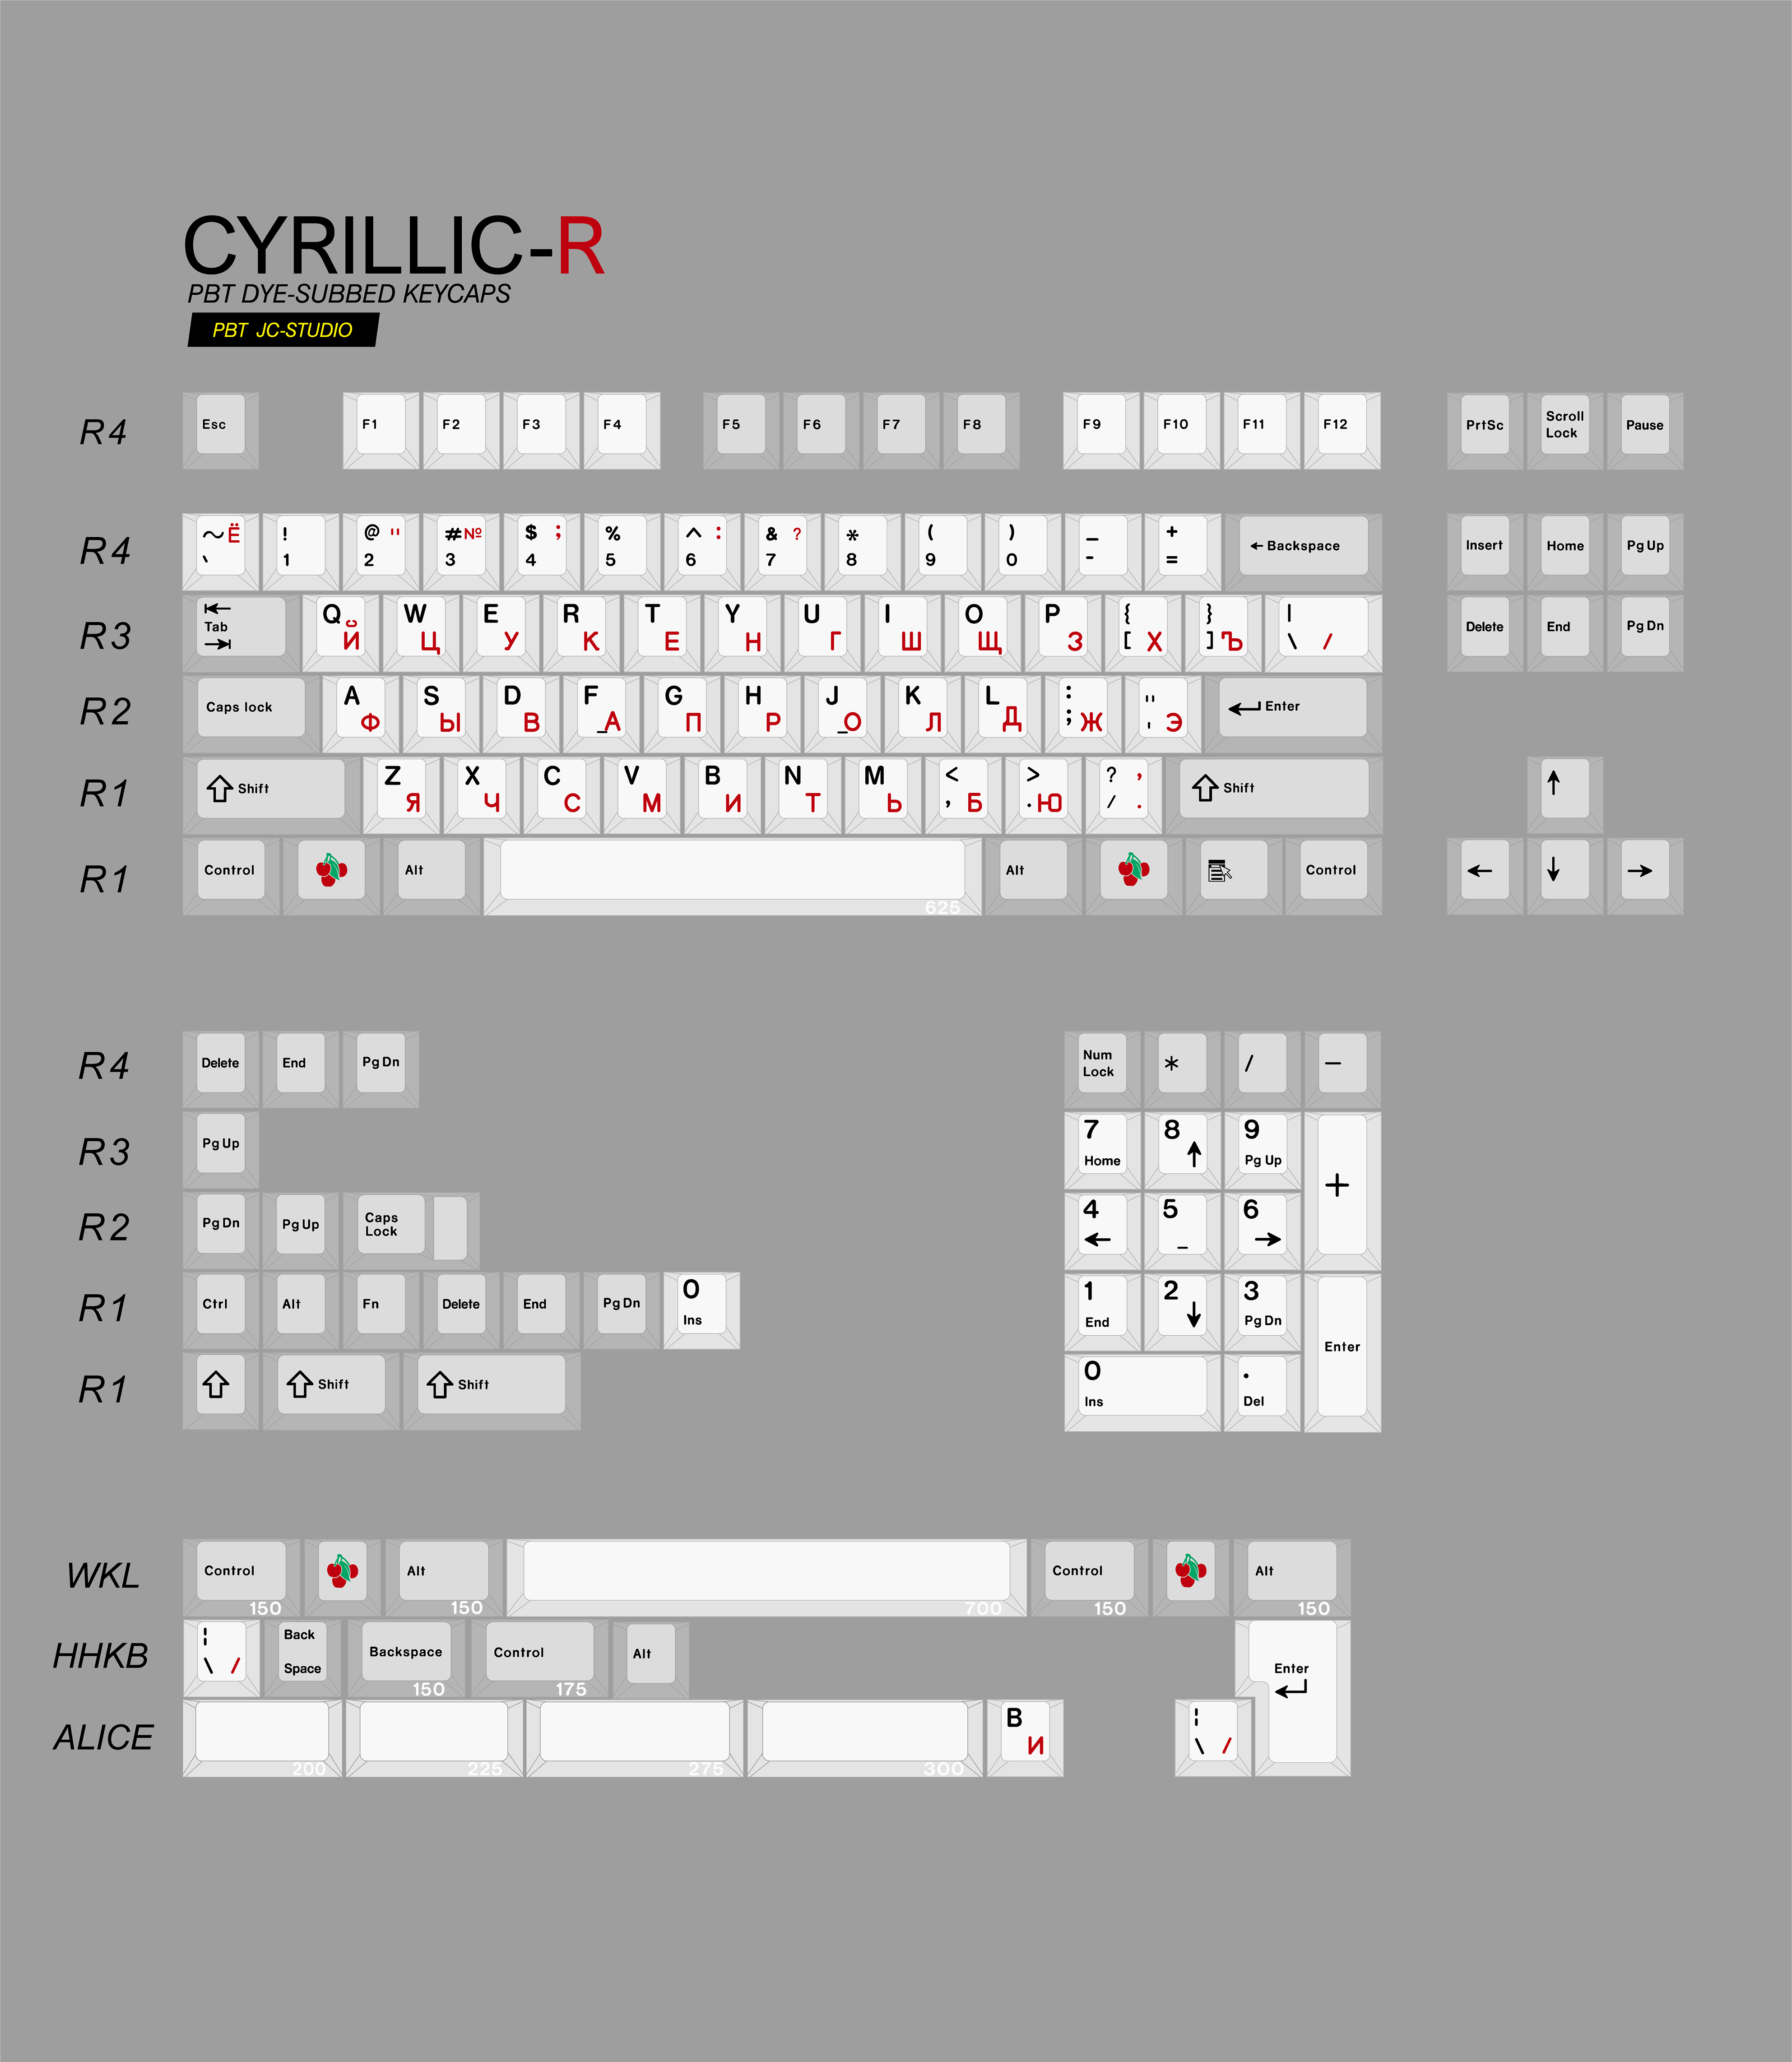 JC Studio Red Cyrillic PBT Dye-Sub Keycaps